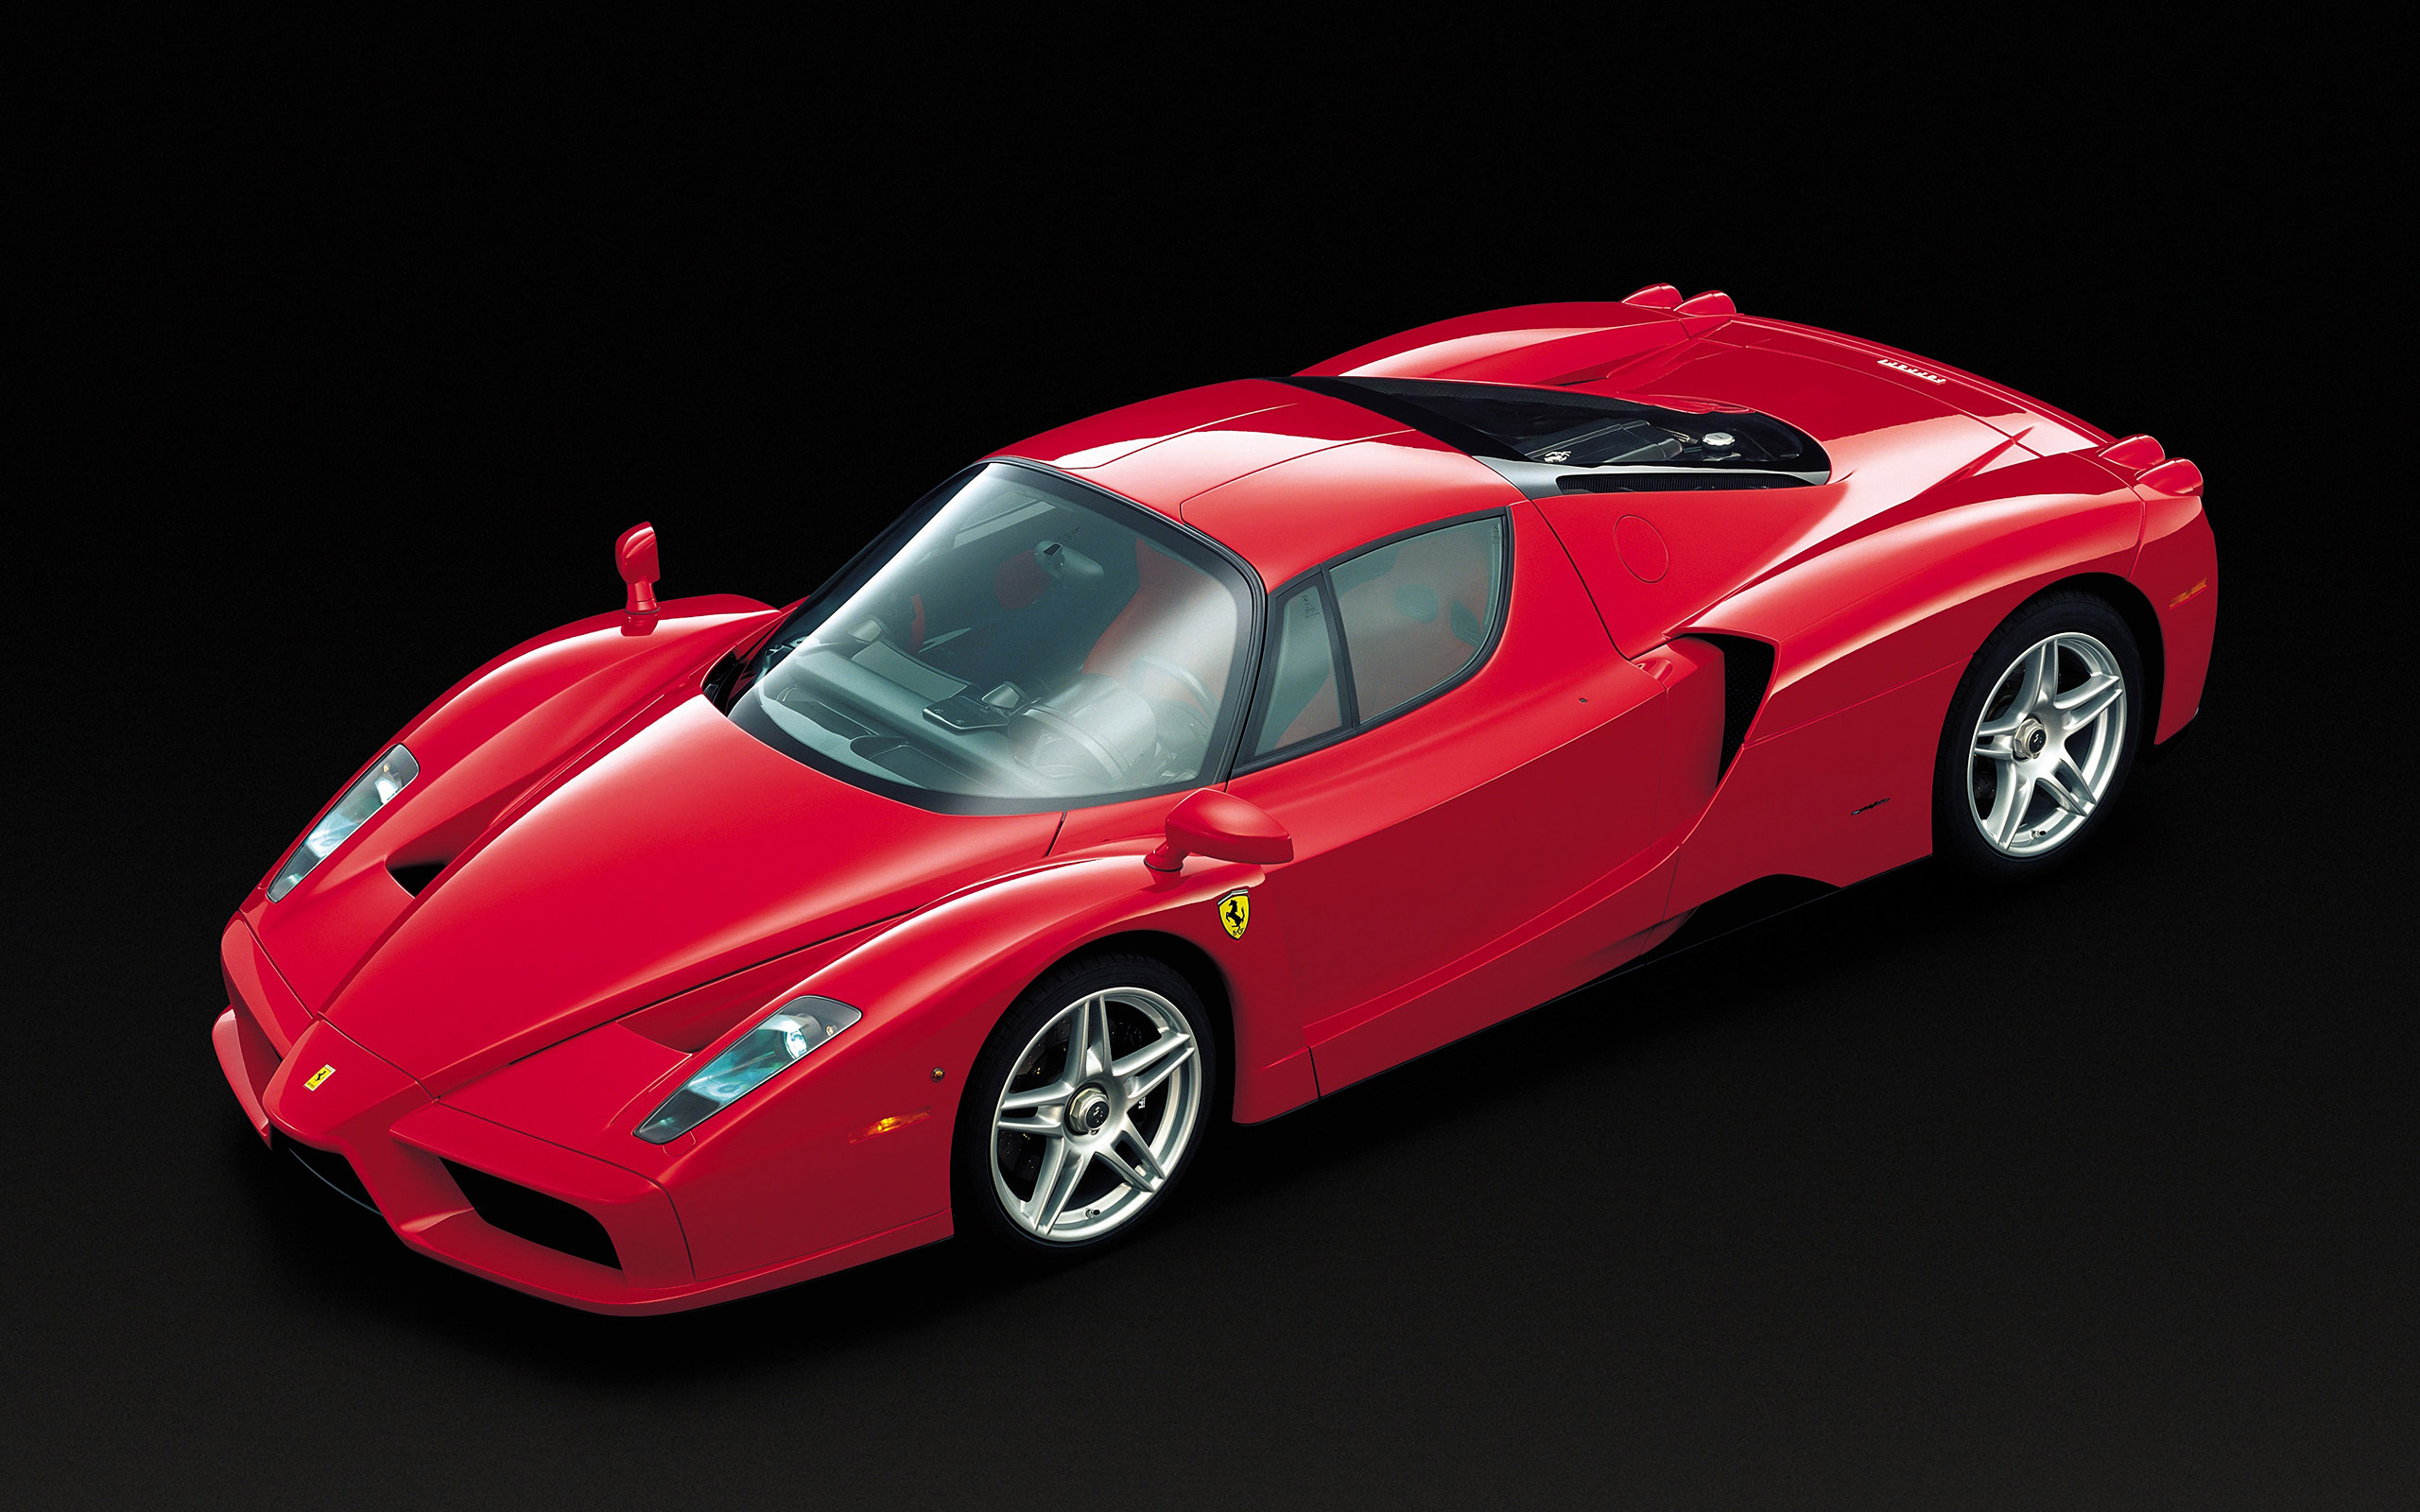  2002 Ferrari Enzo Wallpaper.